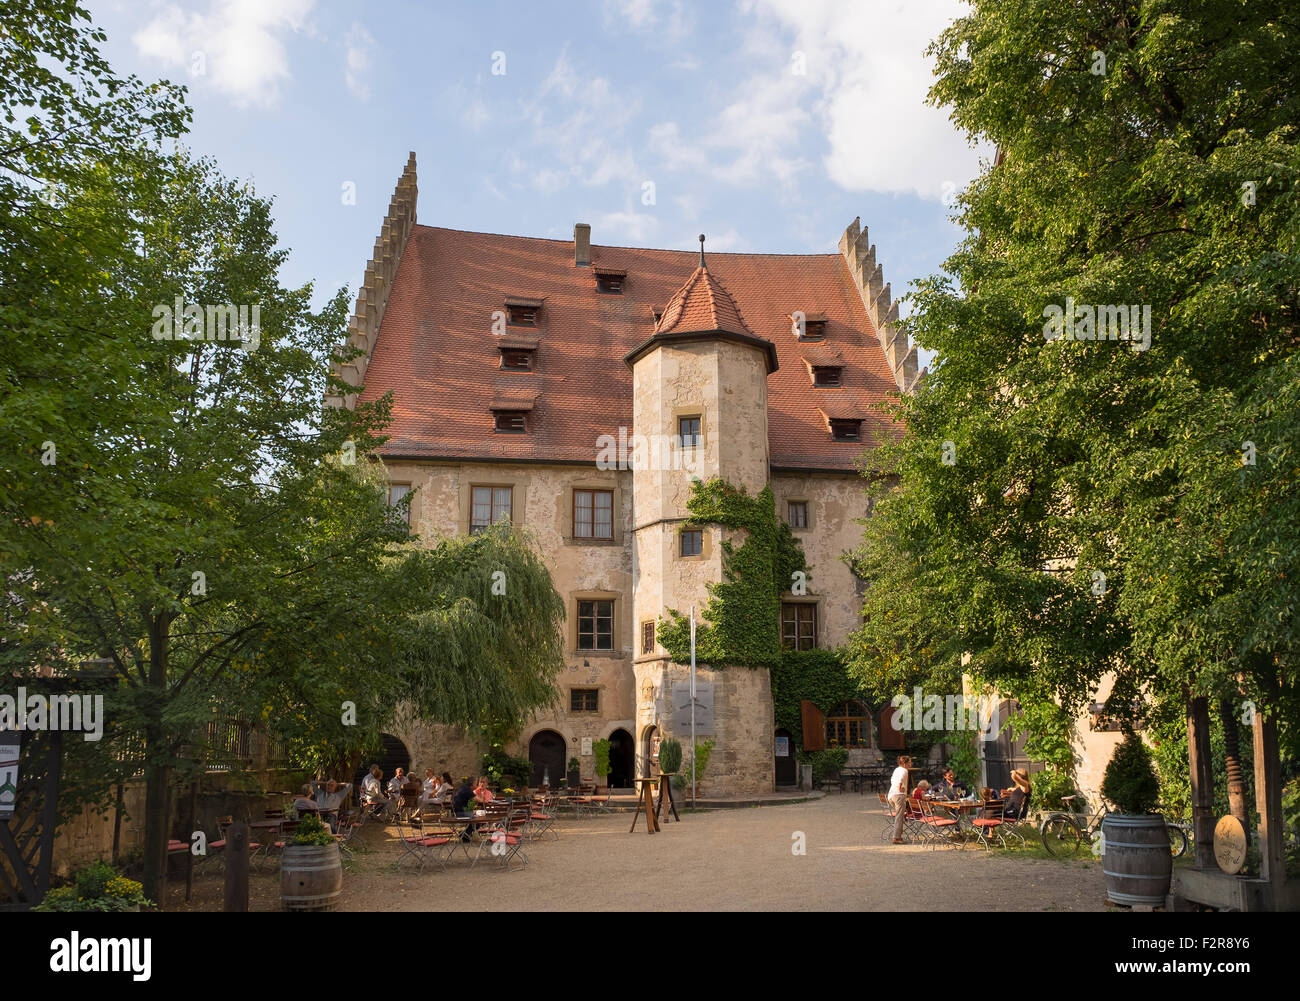 Weingut Schloss Sommerhausen, Mainfranken, Lower Franconia, Franconia, Bavaria, Germany Banque D'Images